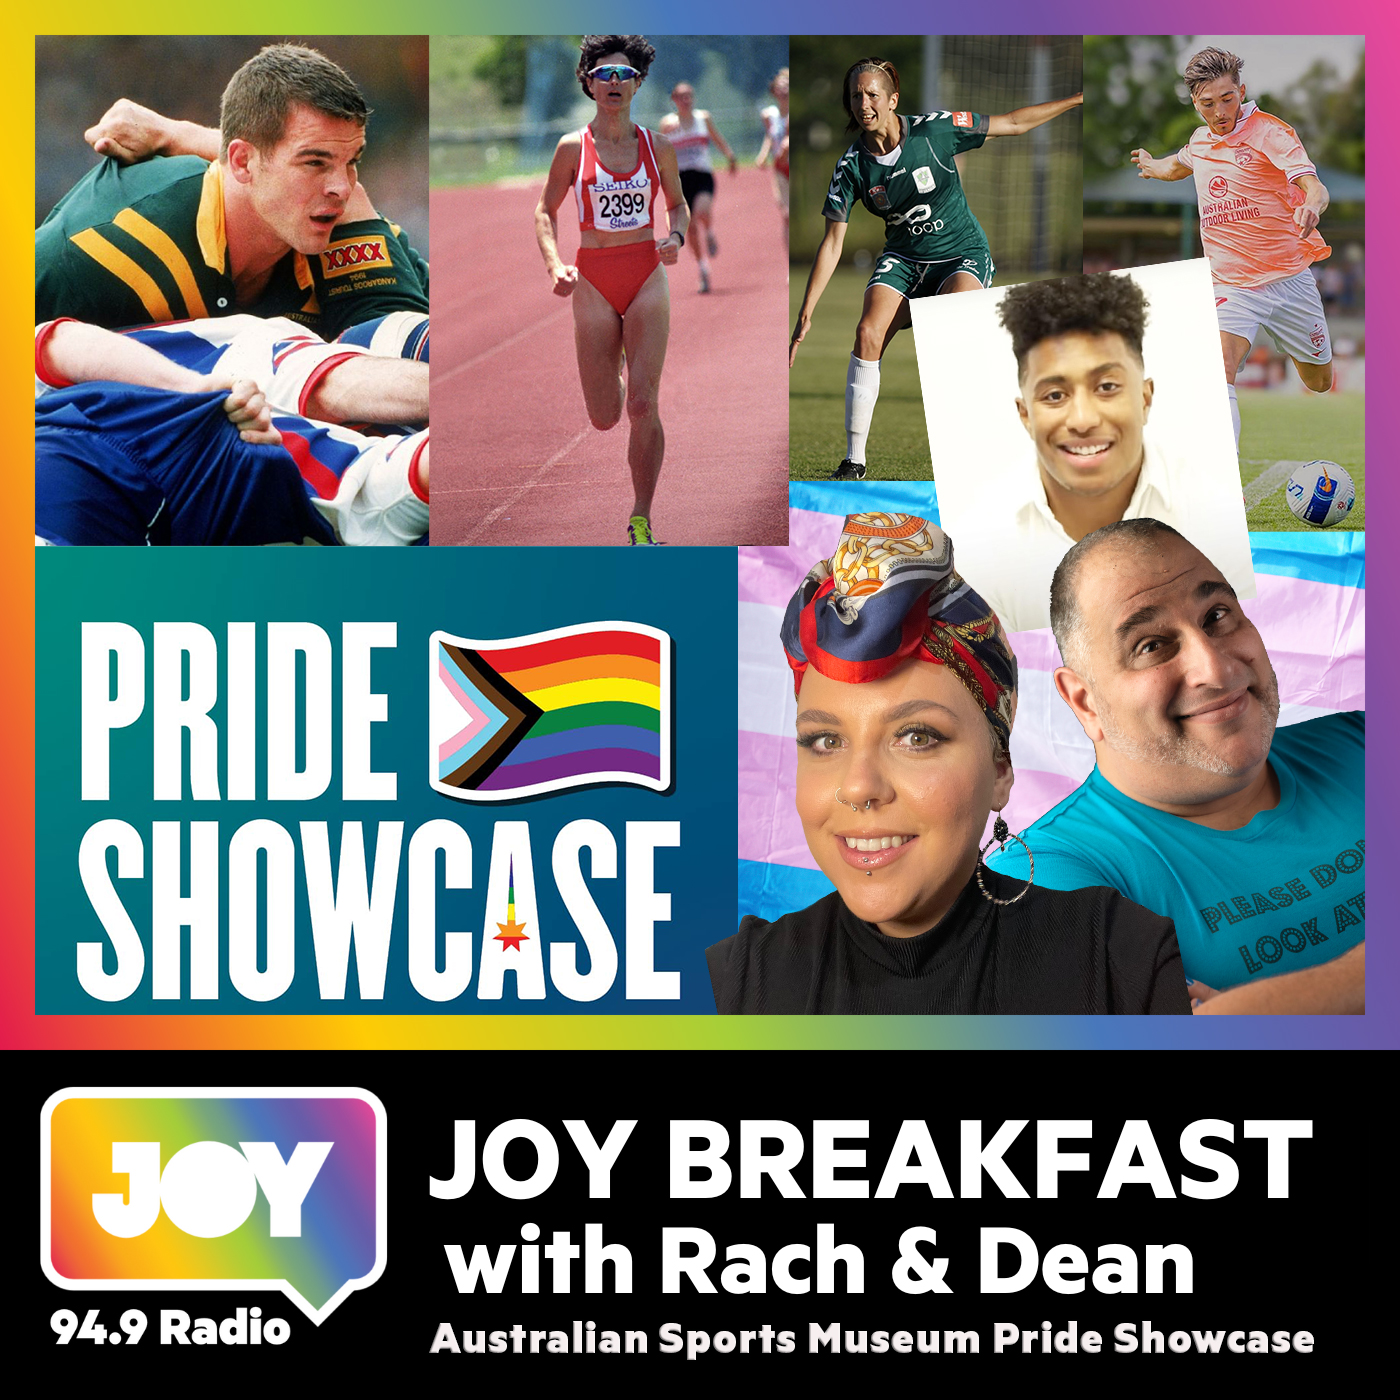 Celebrating LGBTQ+ athletes at the Australian Sports Museum